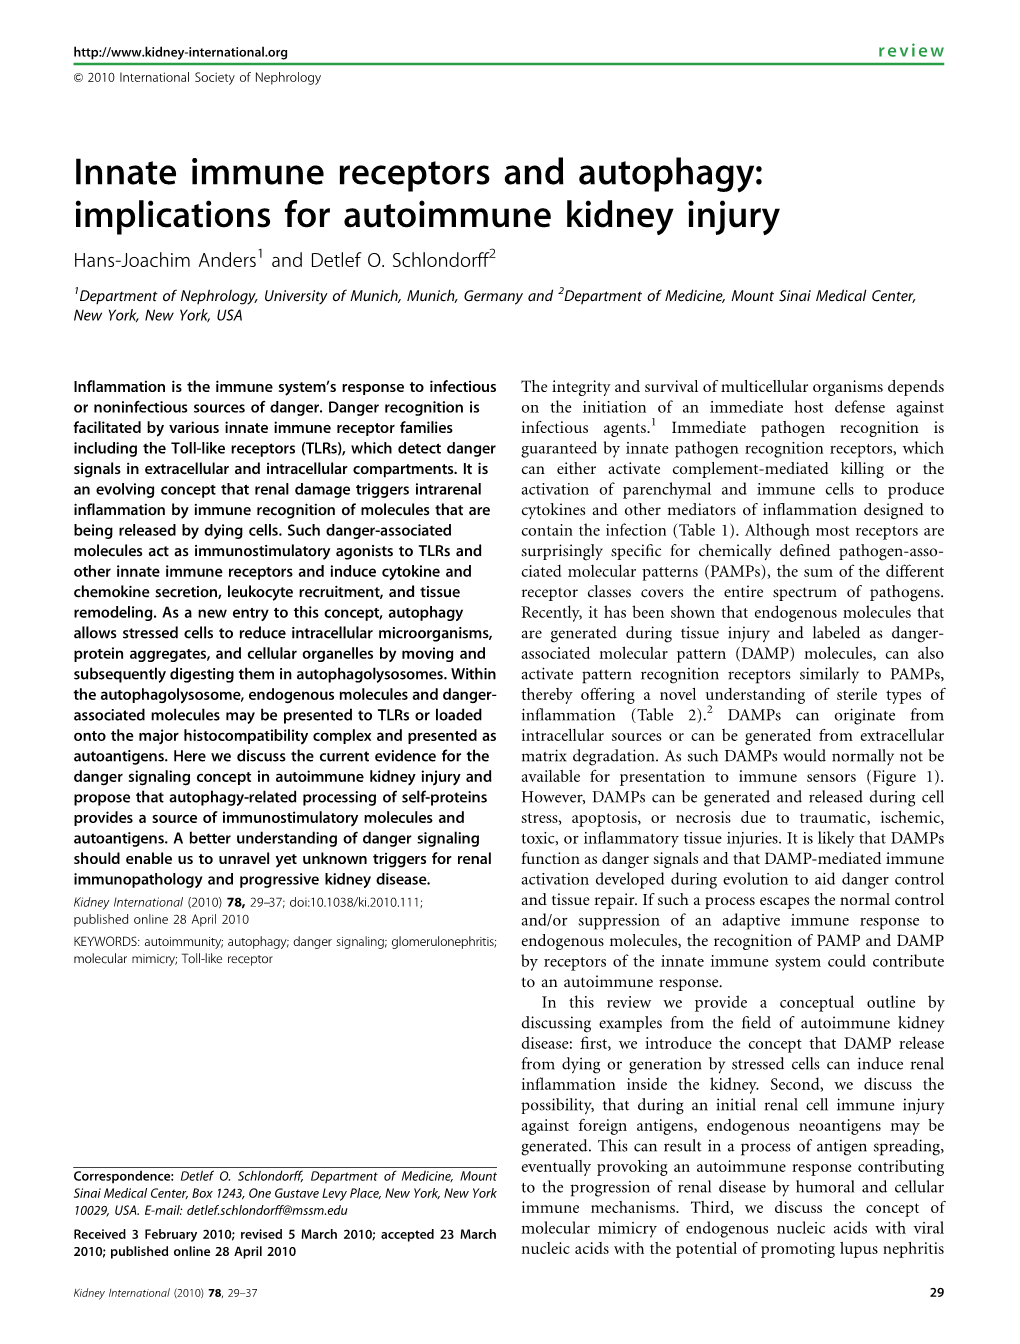 Innate Immune Receptors and Autophagy: Implications for Autoimmune Kidney Injury Hans-Joachim Anders1 and Detlef O